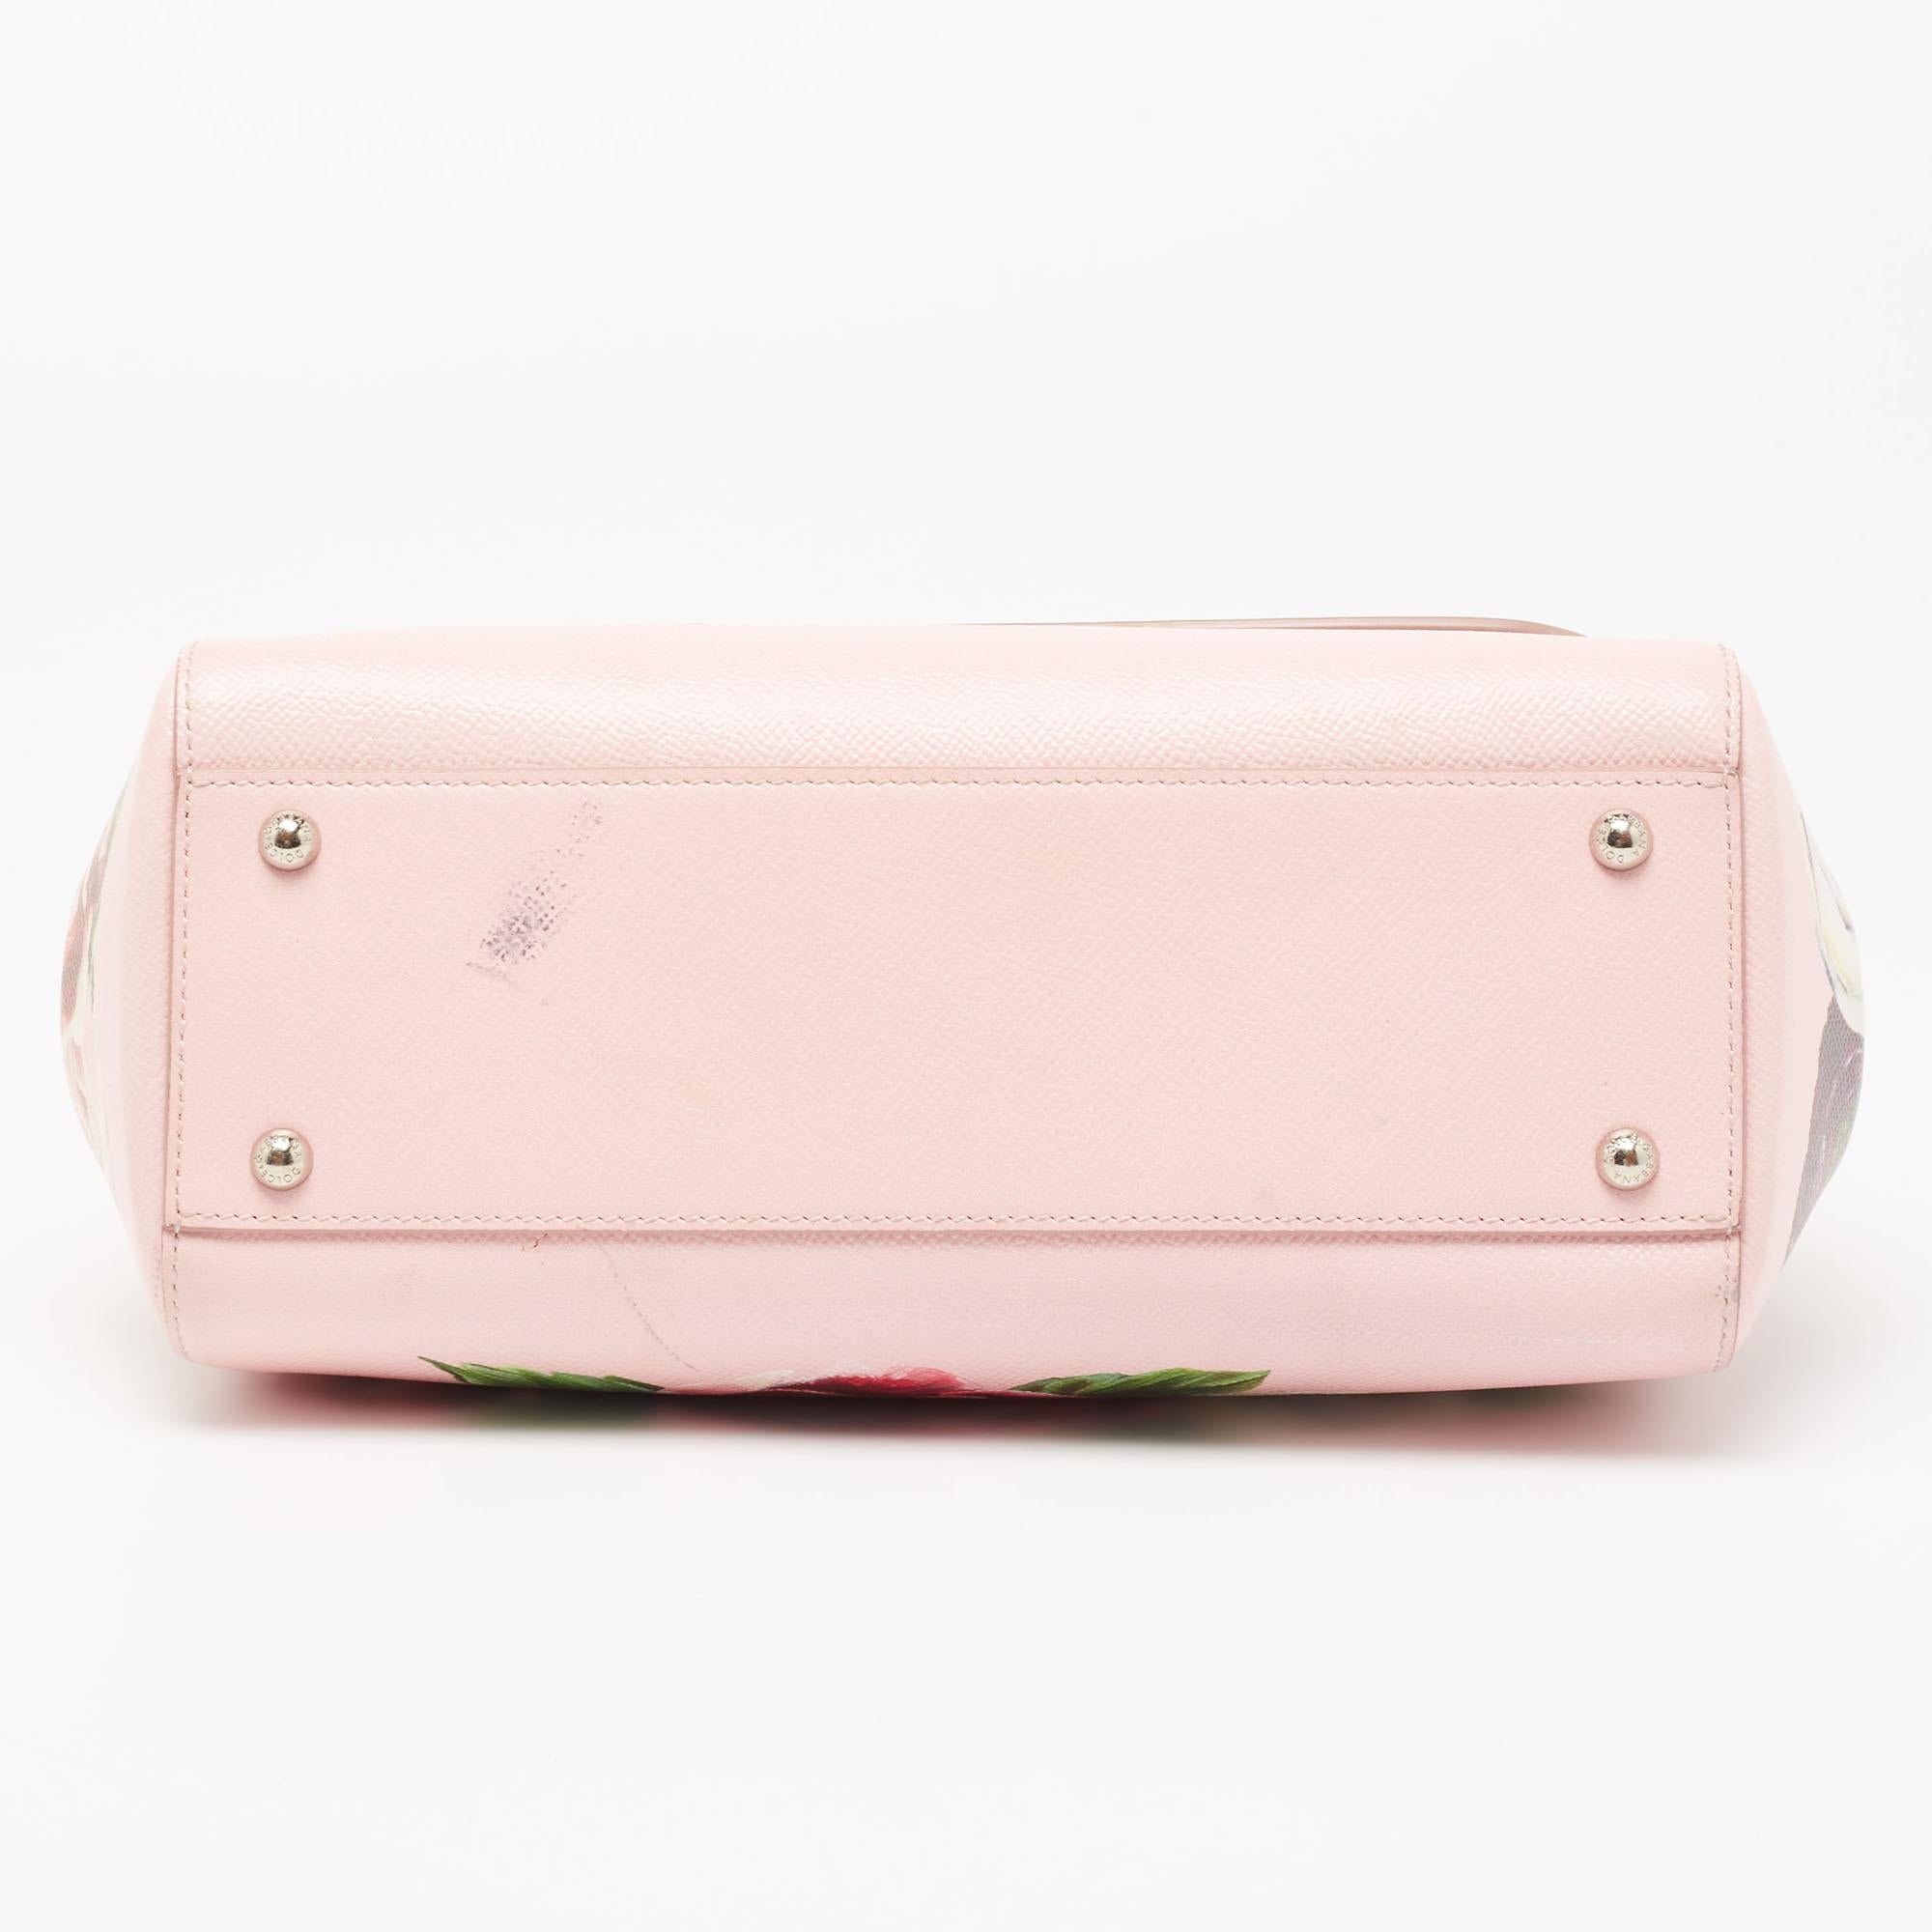 dolce and gabbana bag pink